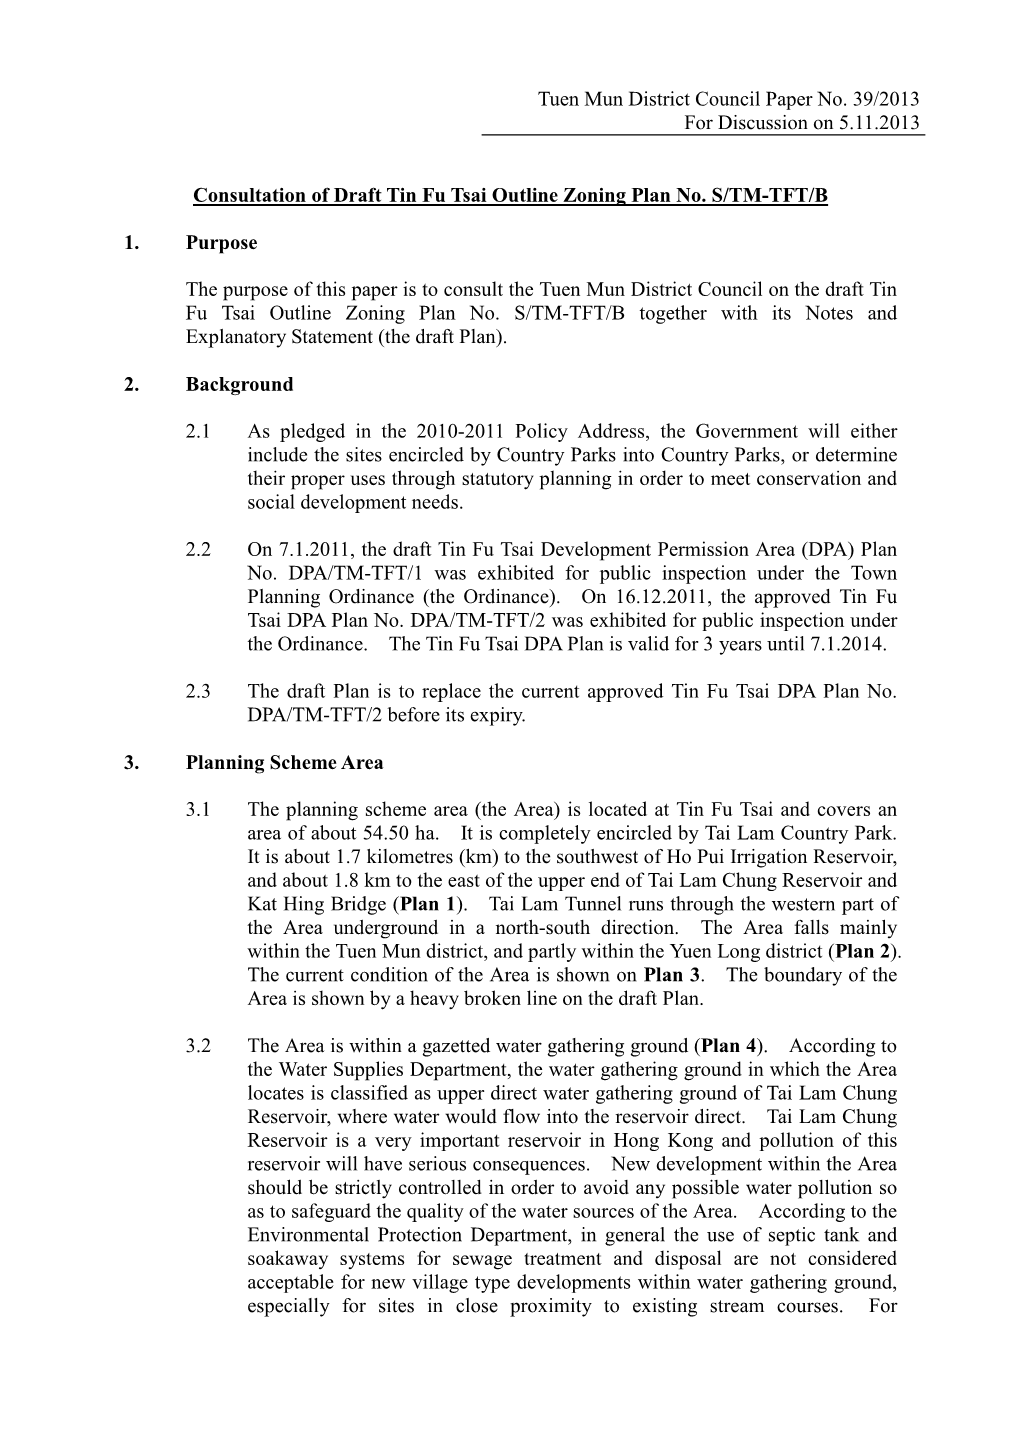 Tuen Mun District Council Paper No. 39/2013 for Discussion on 5.11.2013